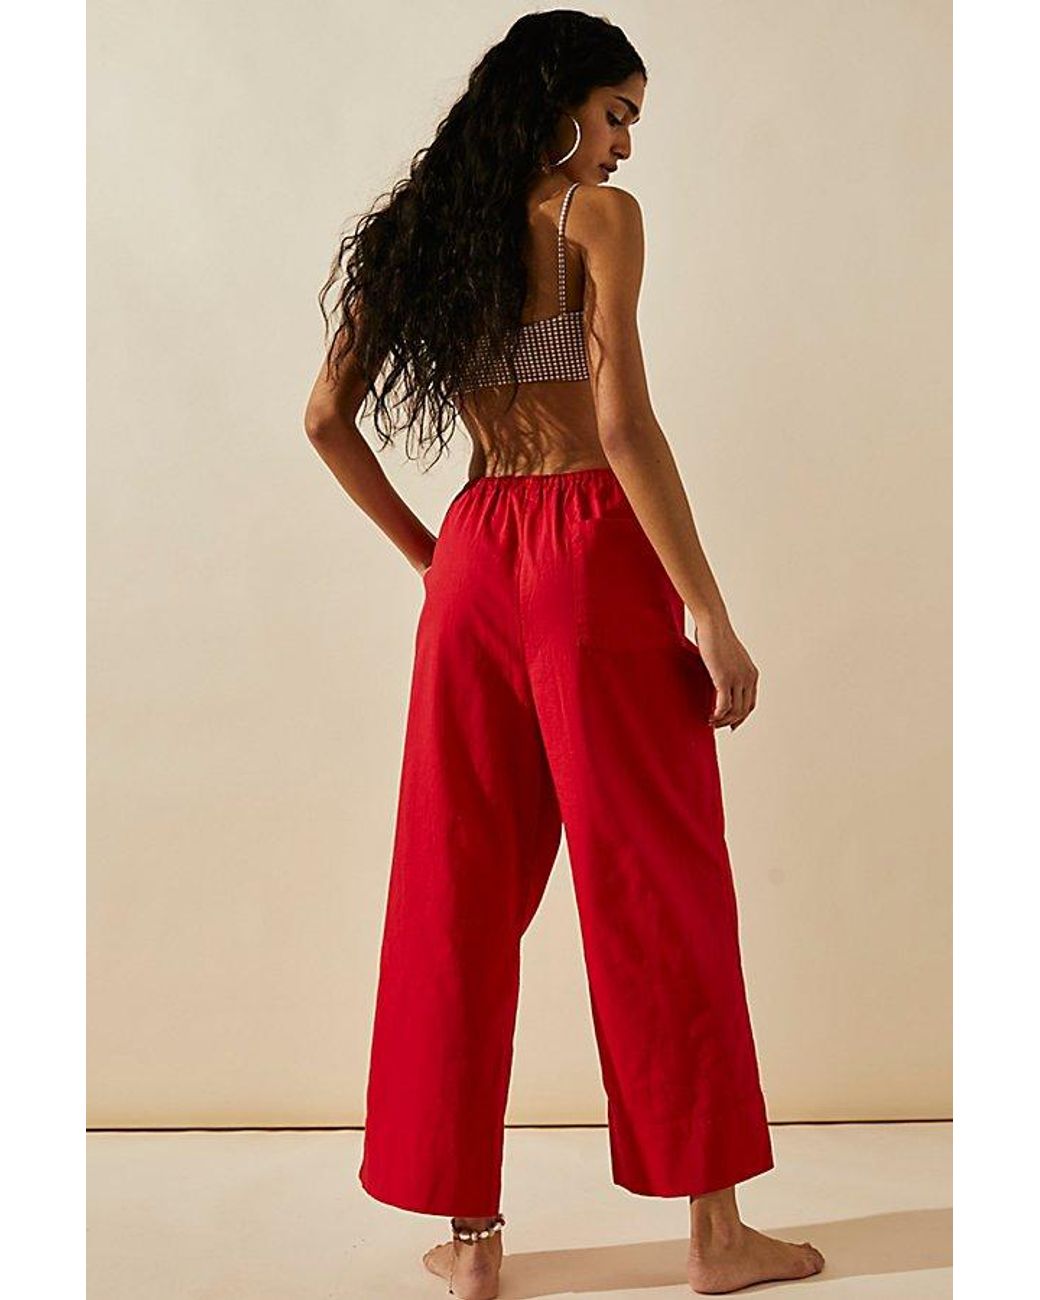 https://cdna.lystit.com/1040/1300/n/photos/freepeople/f62b453c/free-people-Atlas-Red-Livin-In-It-Cotton-linen-Pants.jpeg